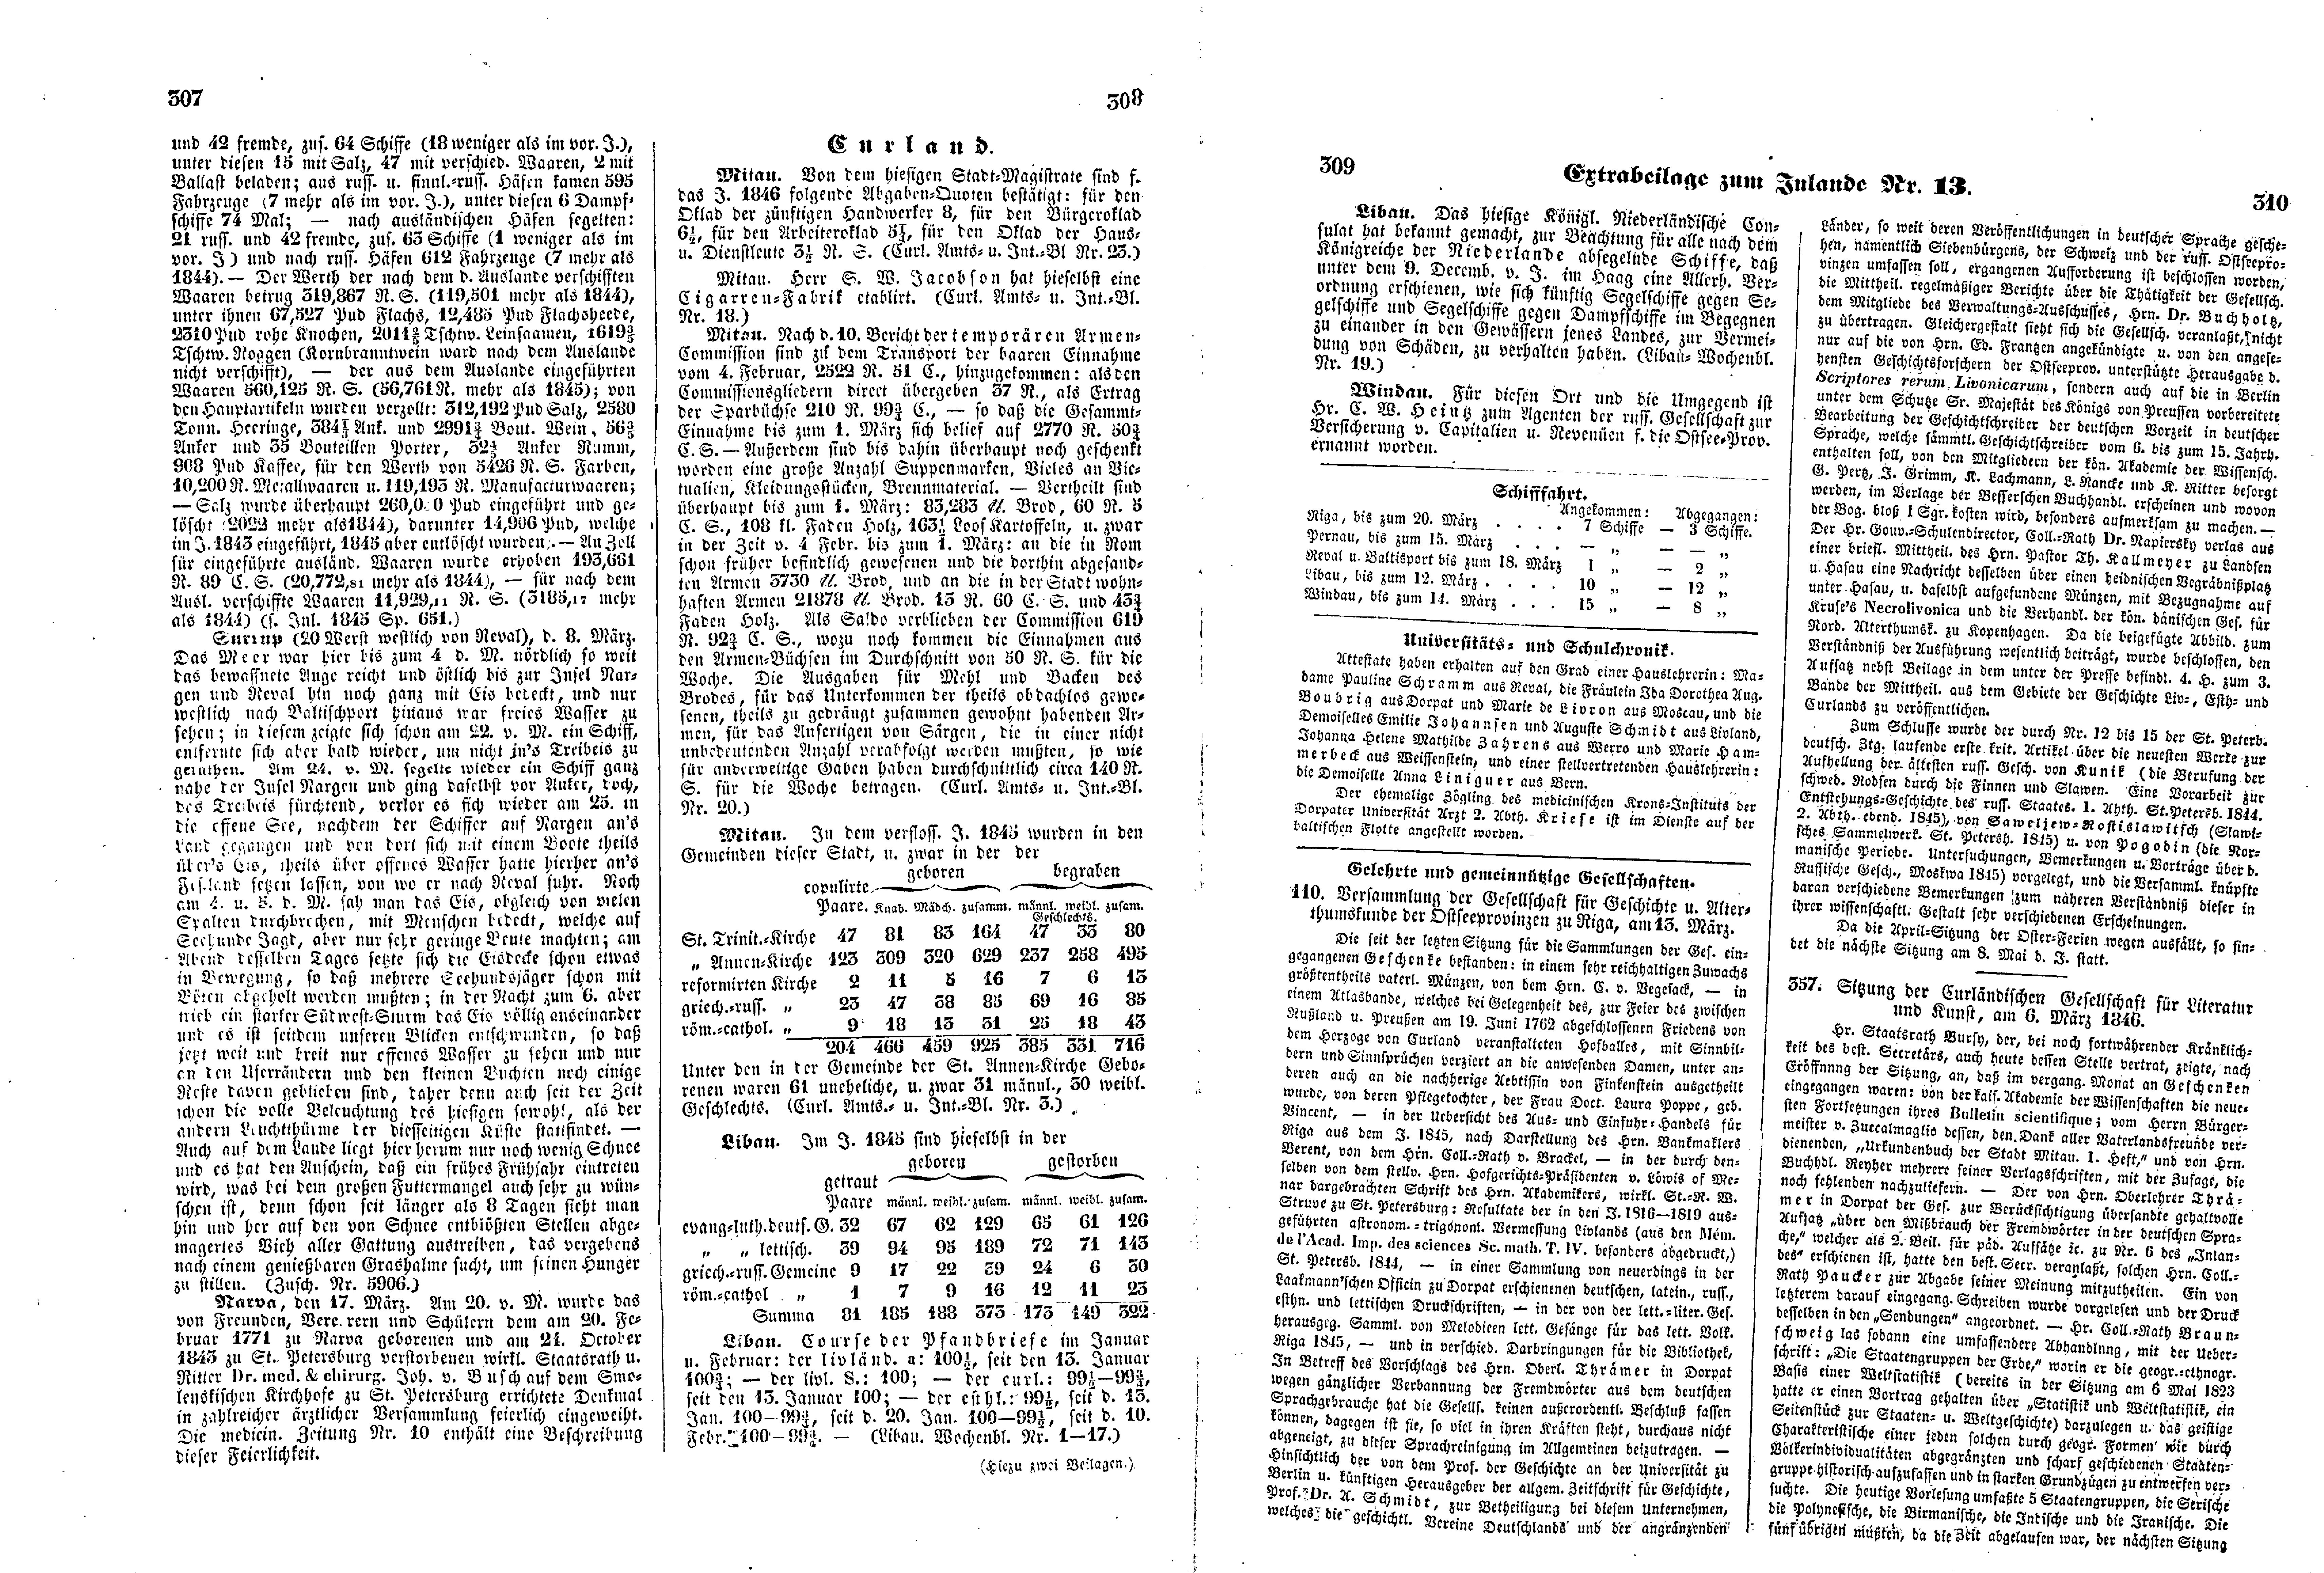 Das Inland [11] (1846) | 82. (307-310) Main body of text